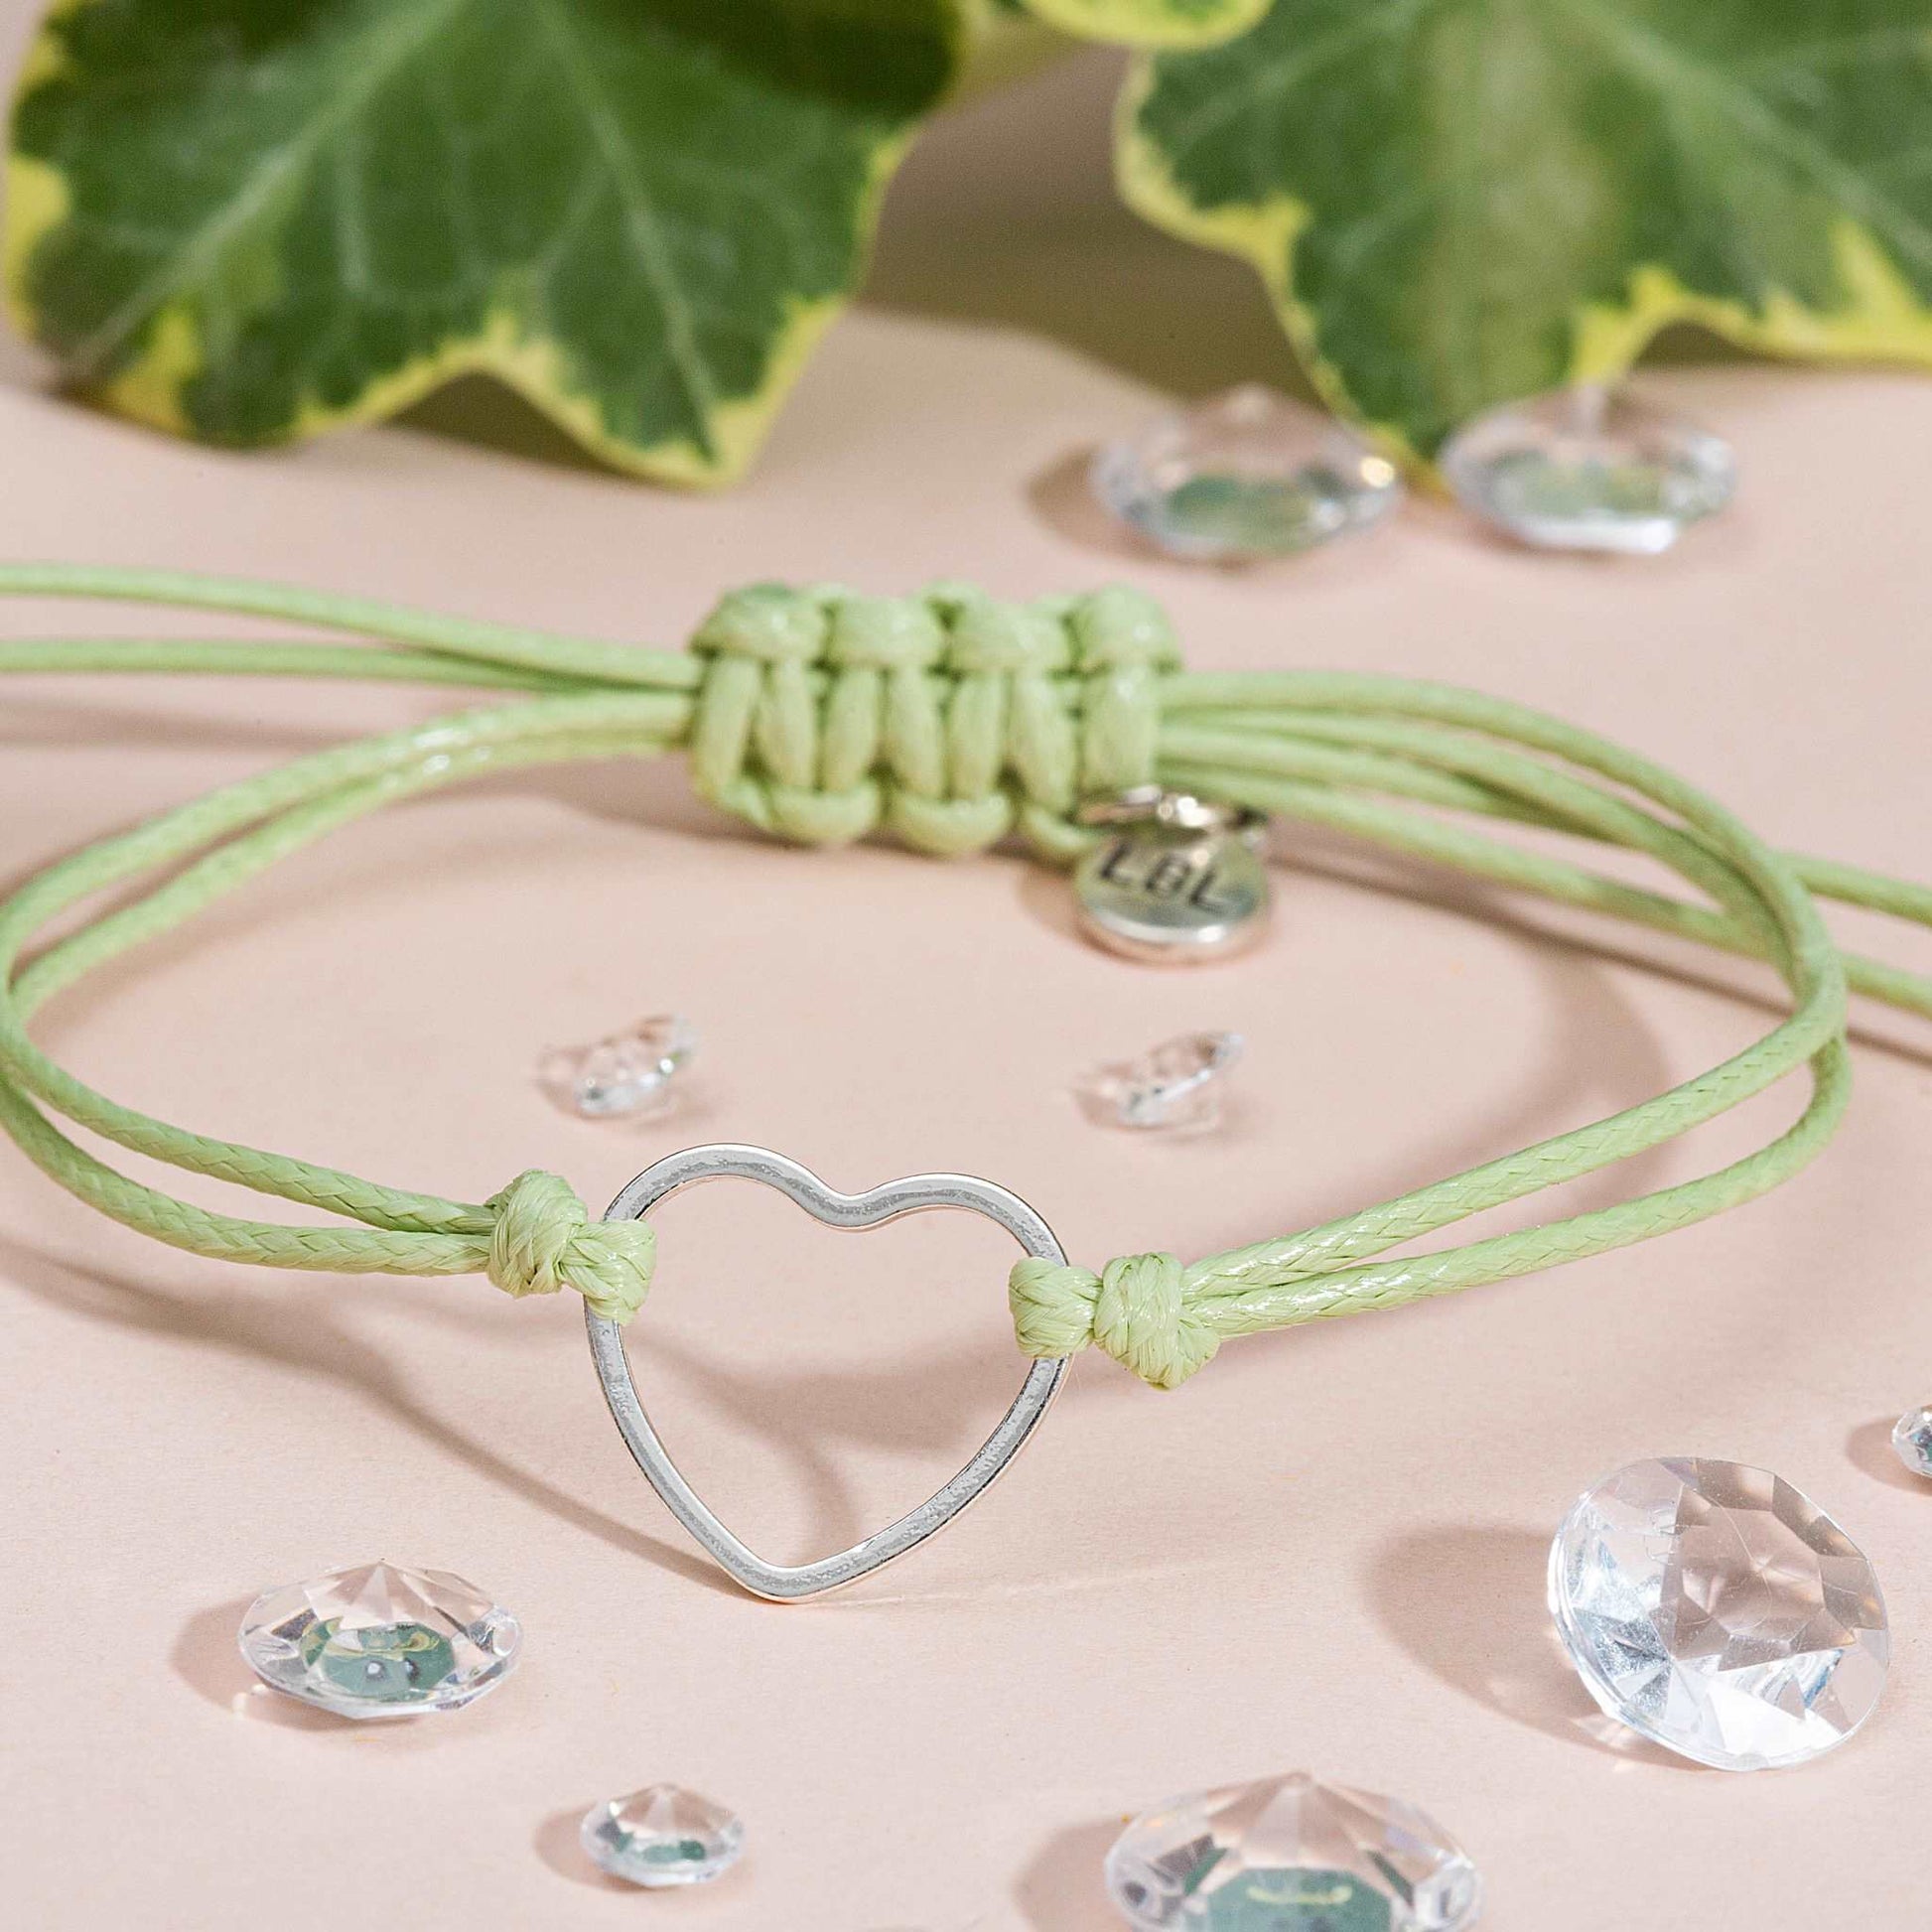 Birthstone Wish Bracelets - Fashion Hut Jewelry